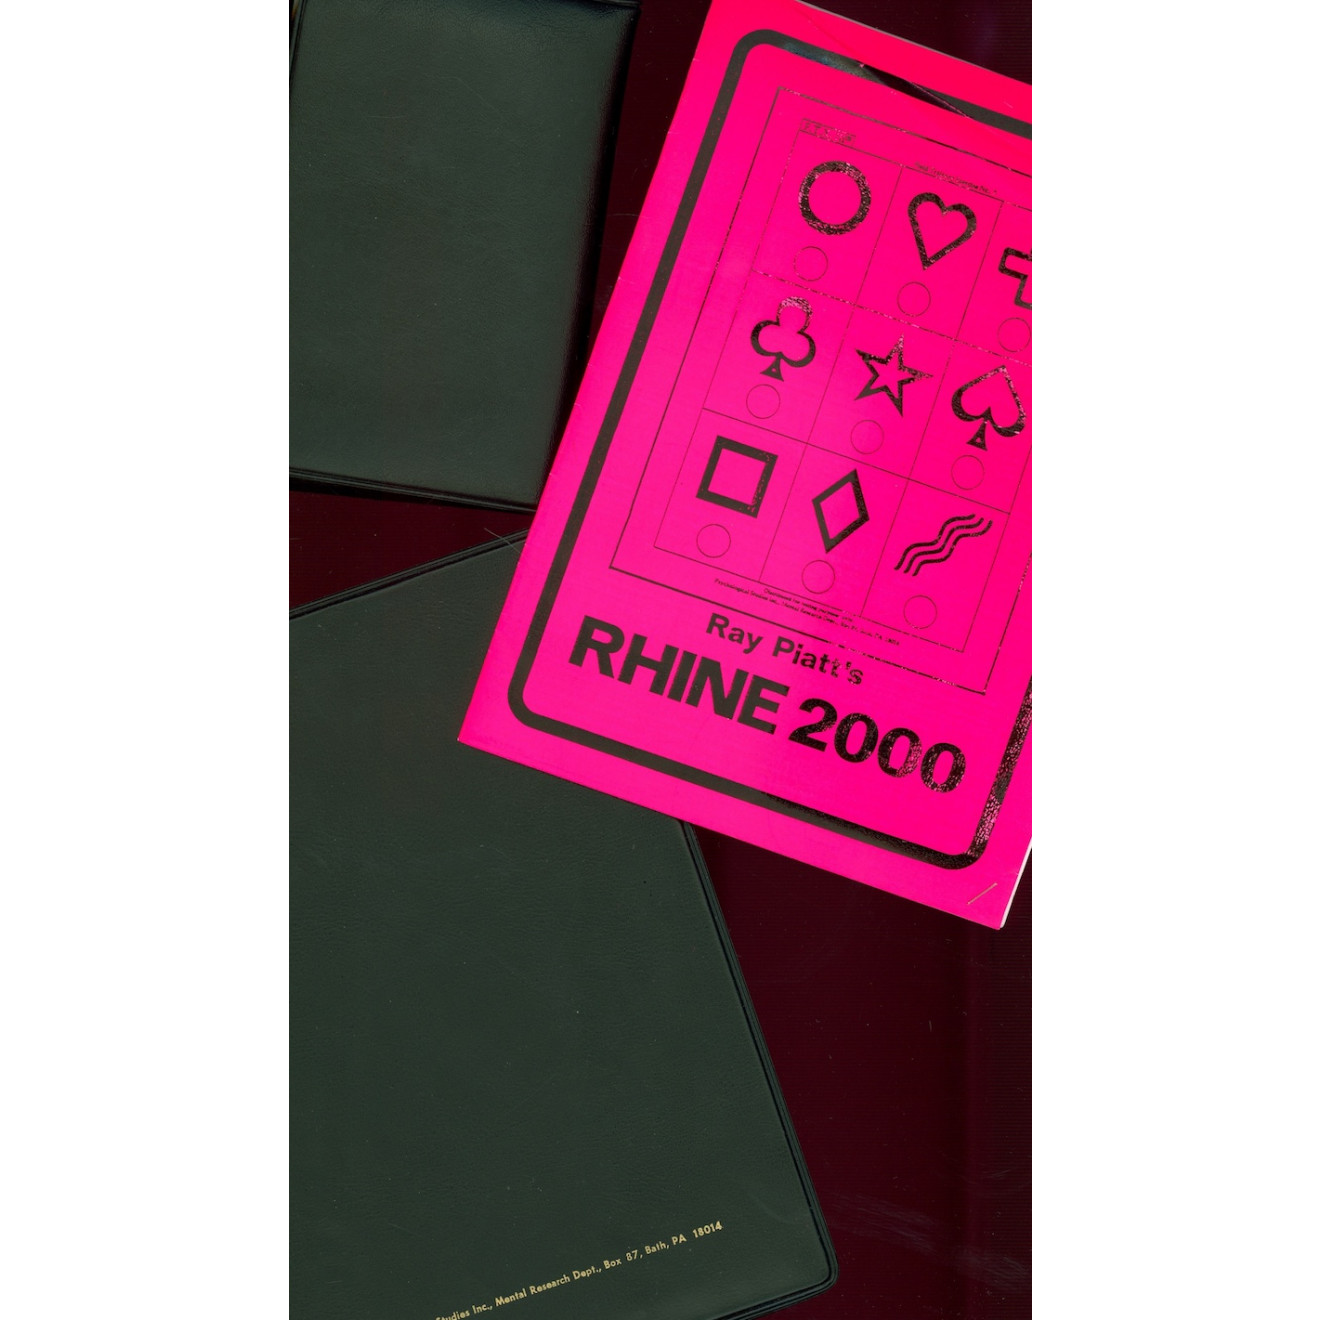 Rhine 2000 III